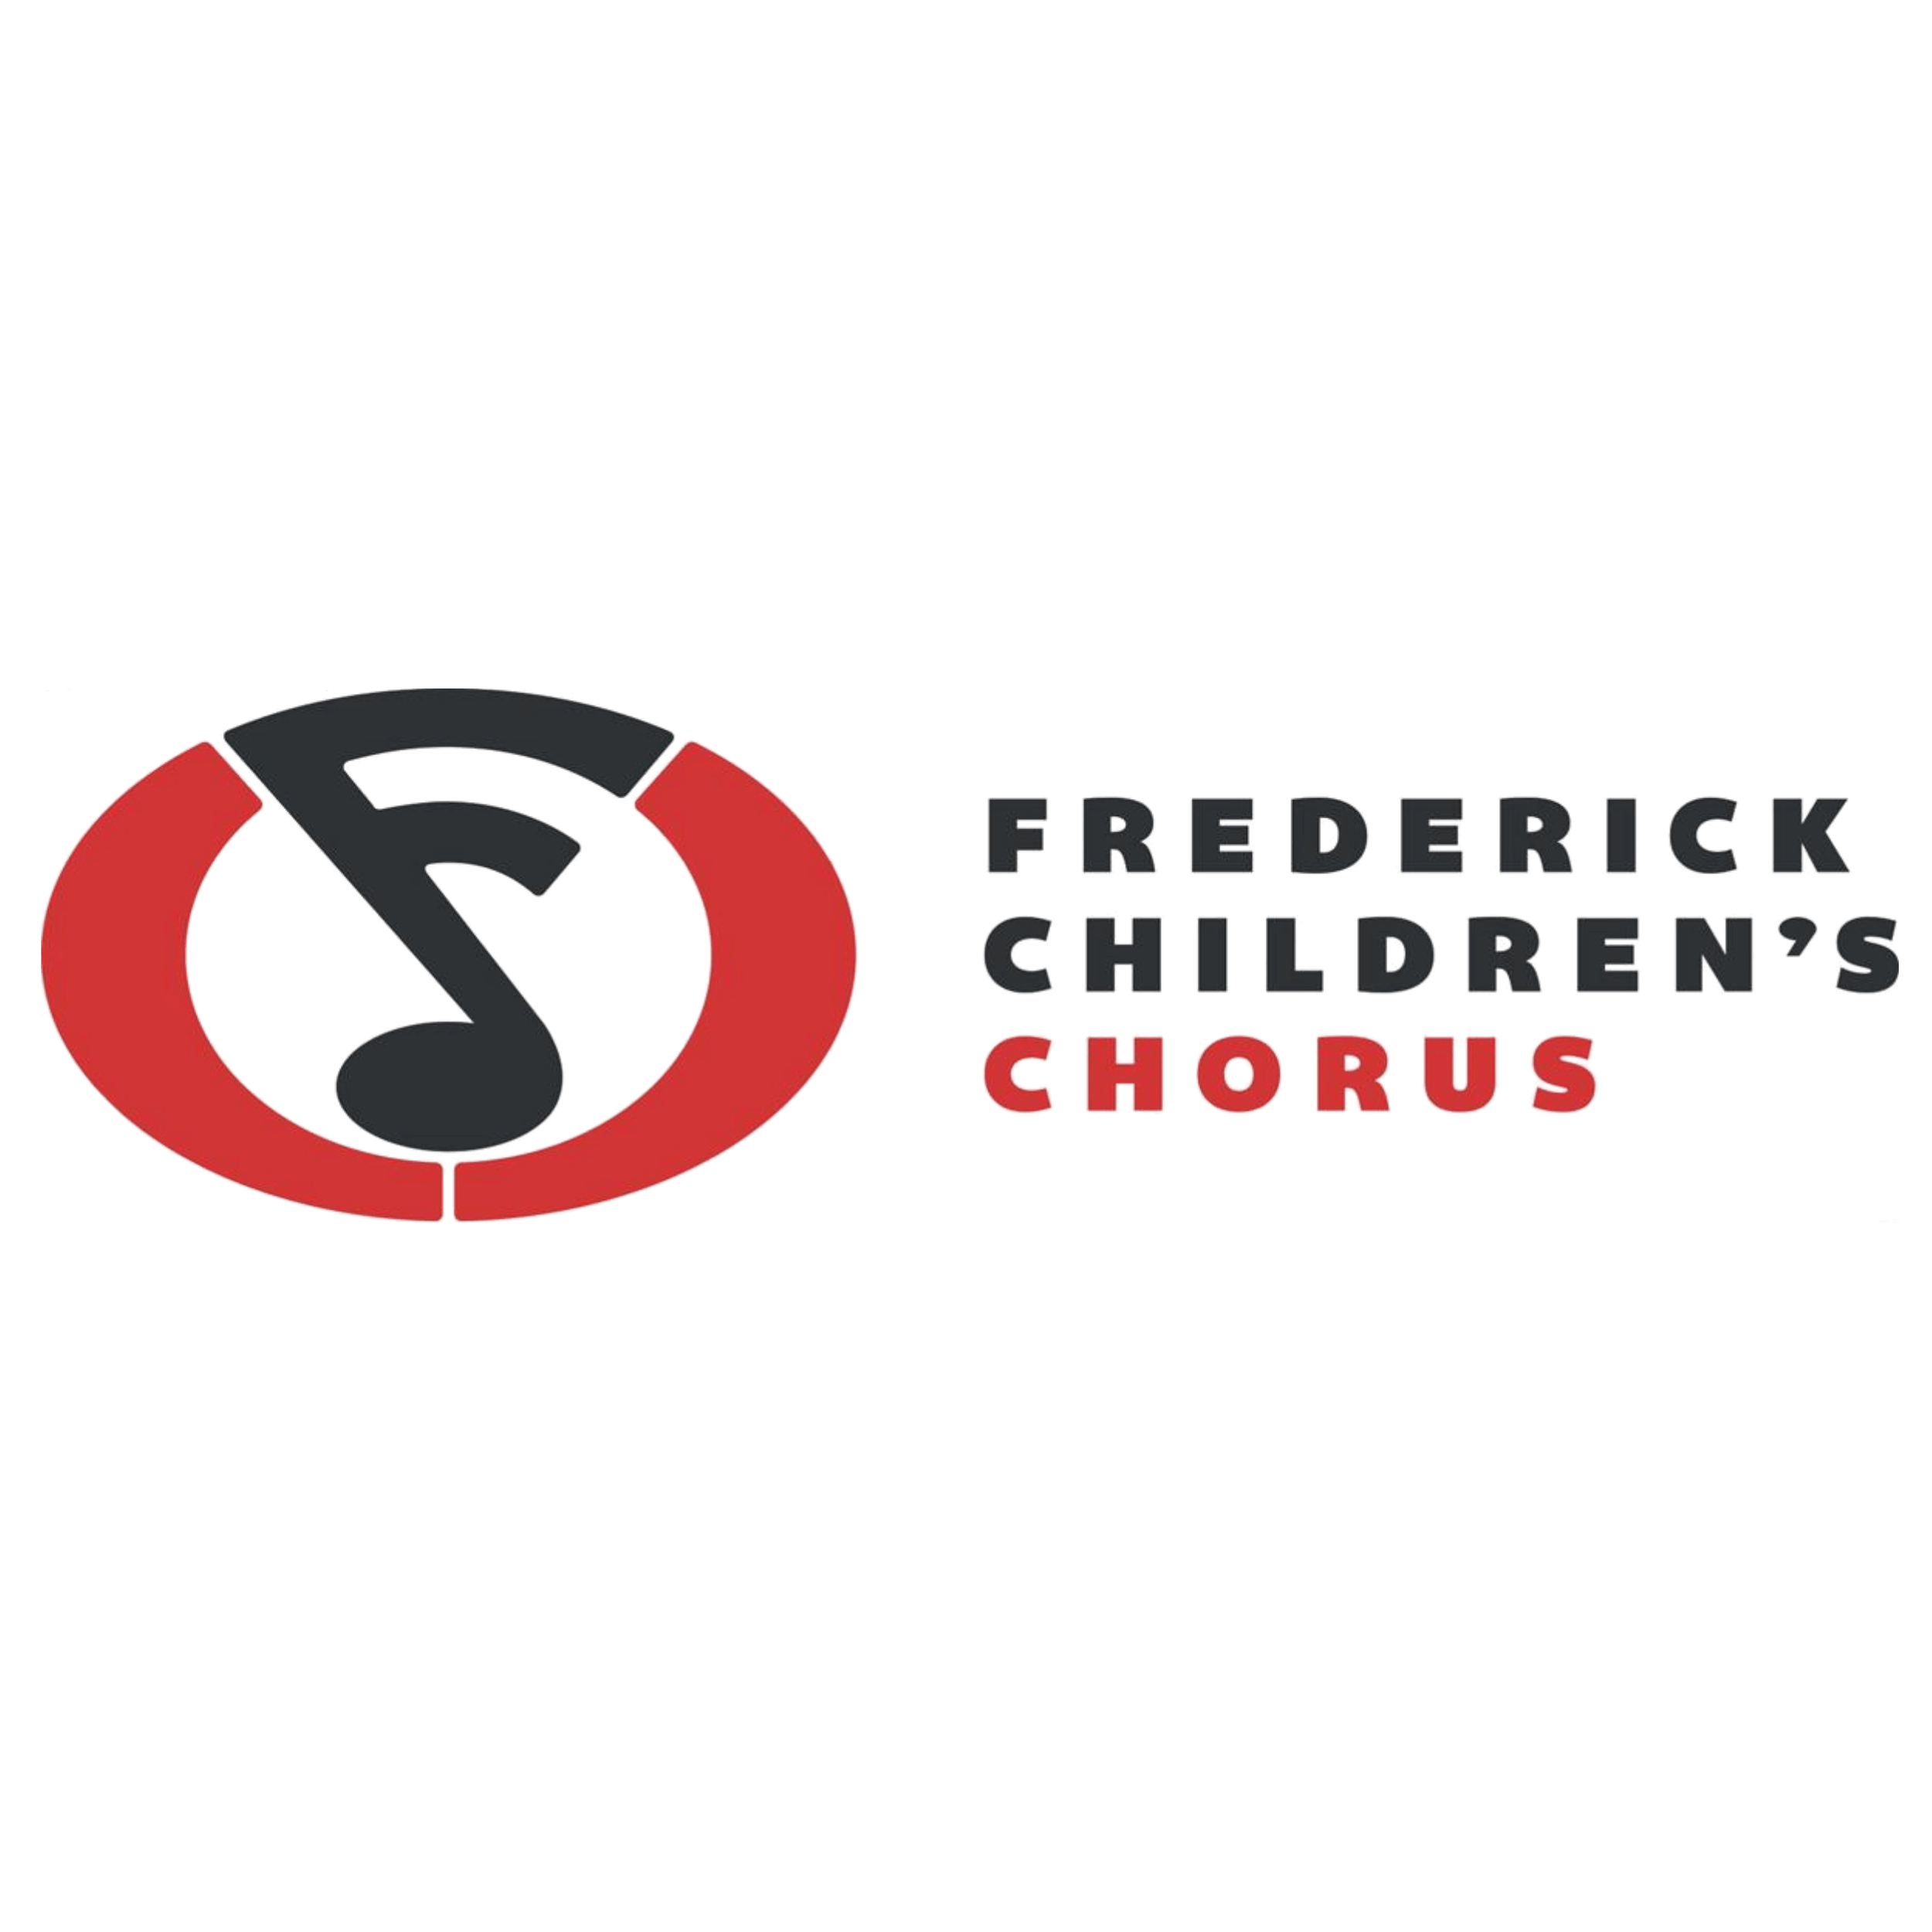 Frederick Children's Chorus